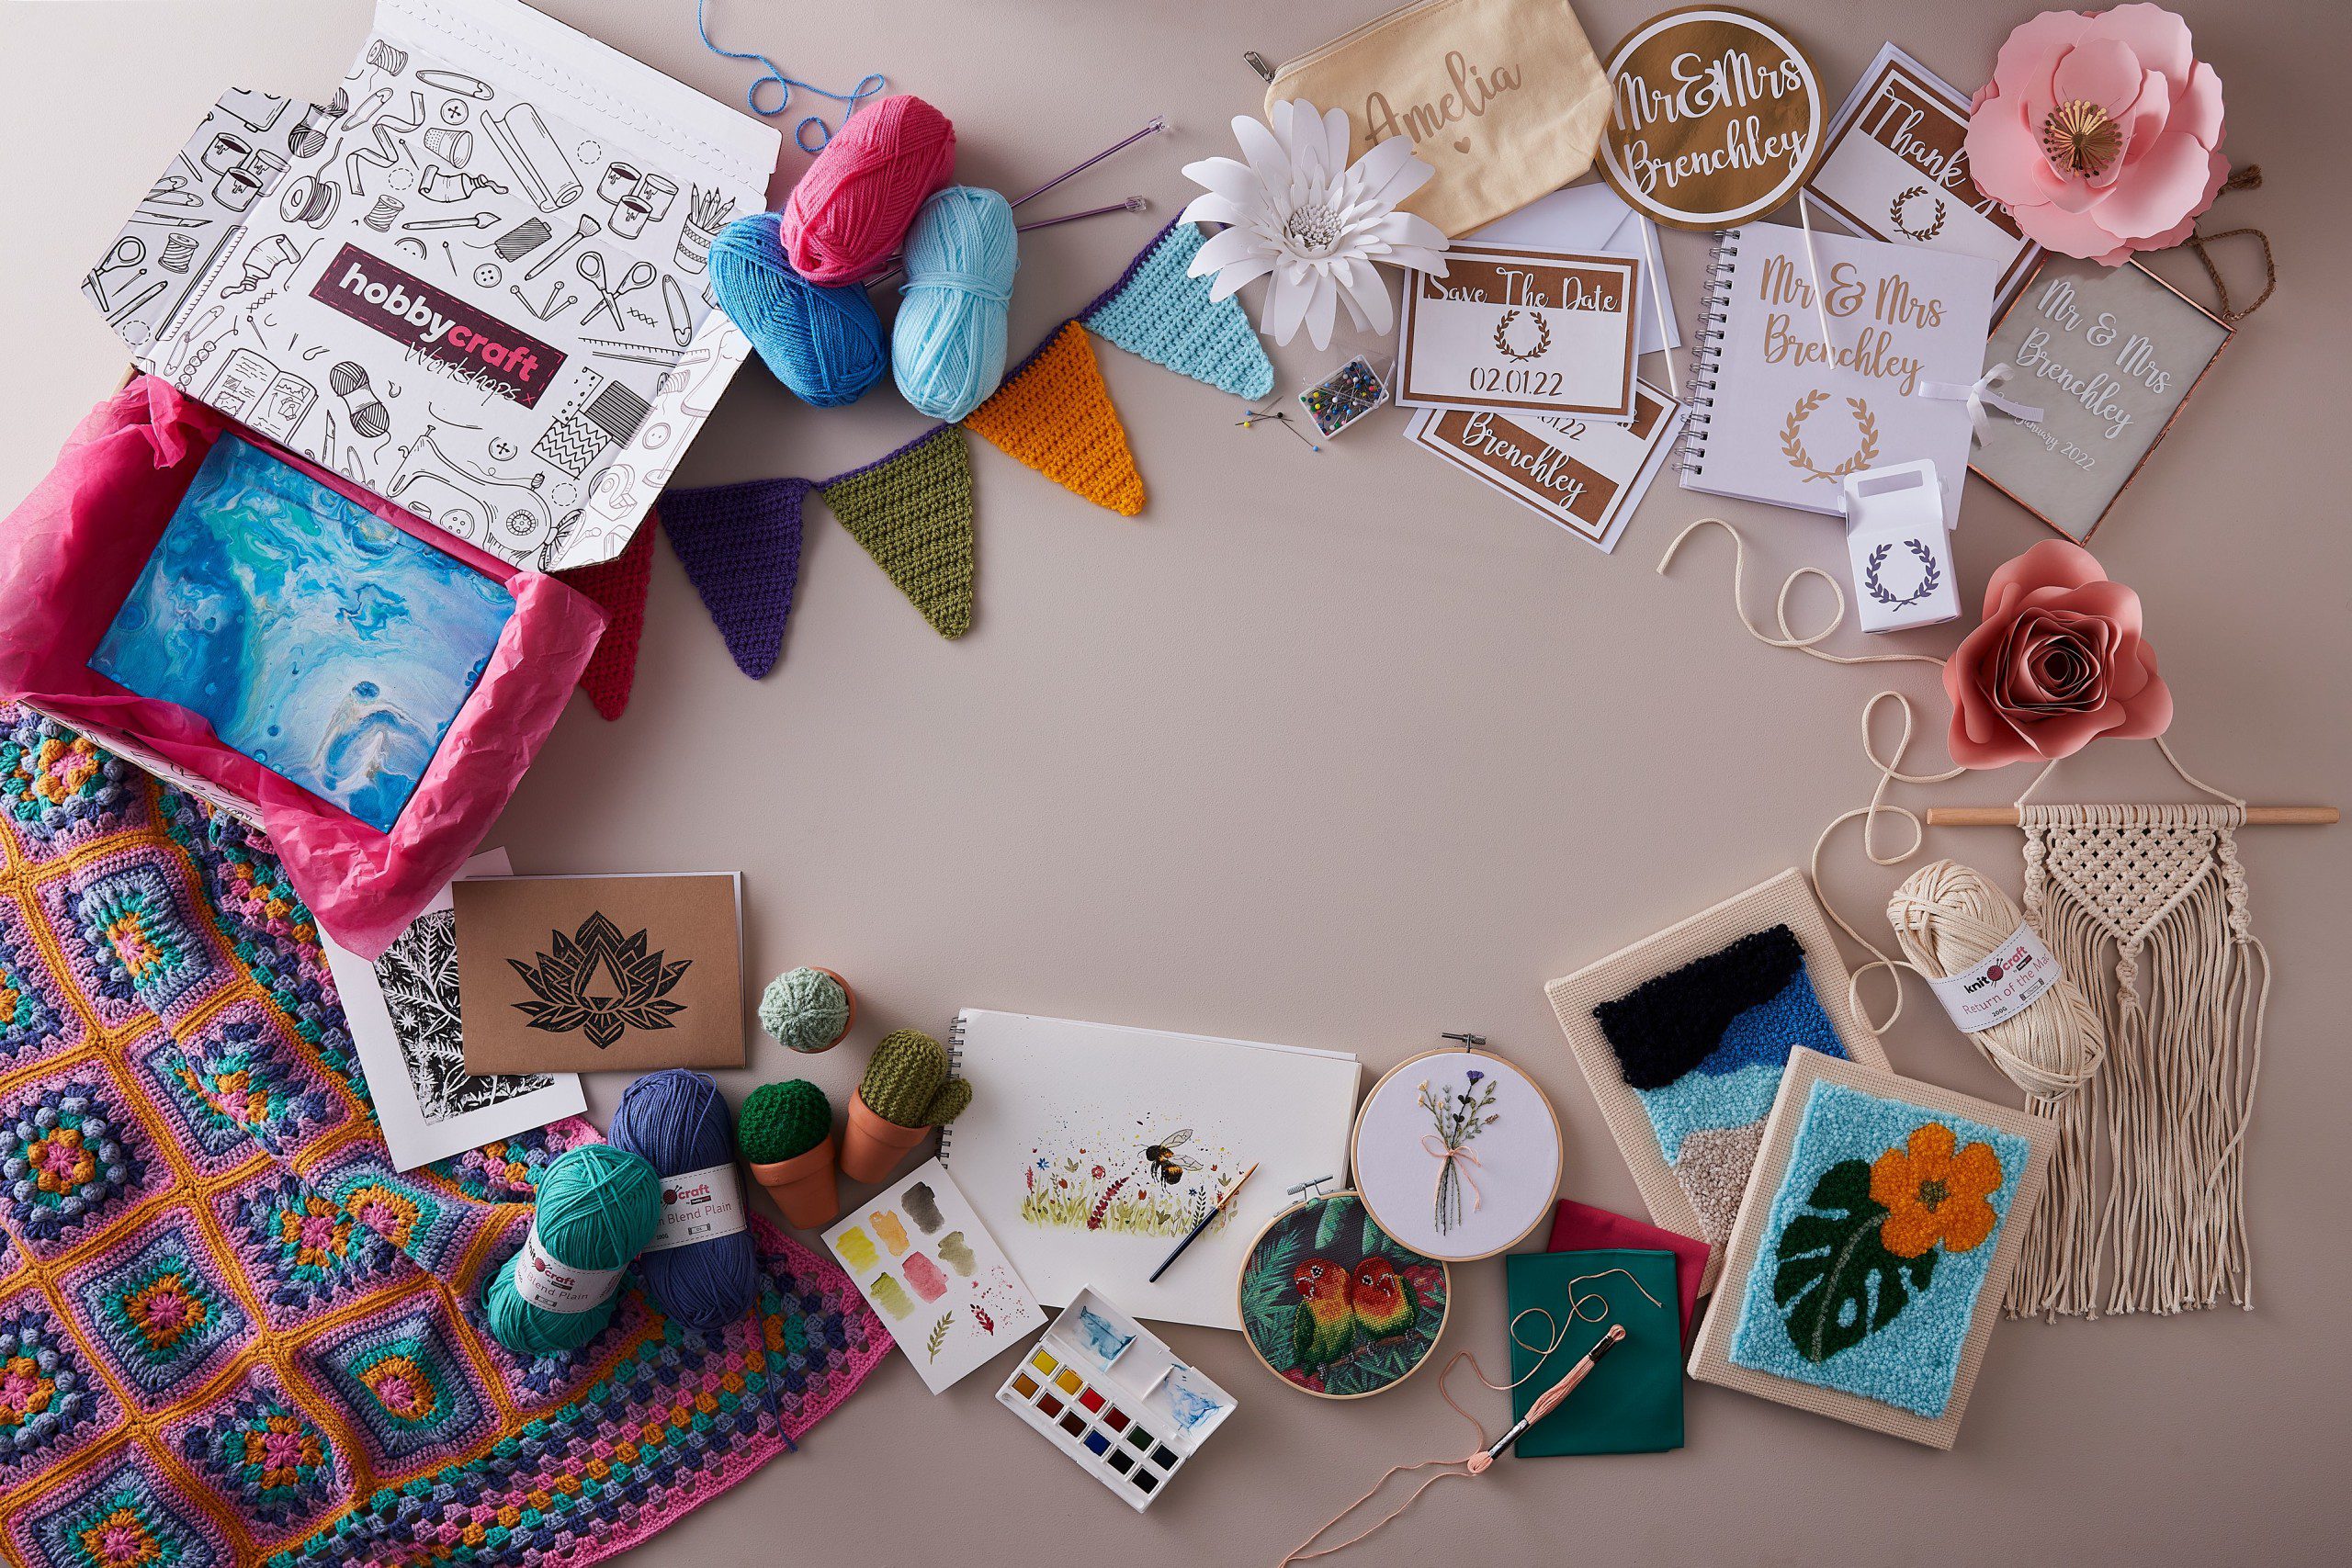 Creative Kits & Hobby Hampers — House of Hobby - Perth's Best Workshops